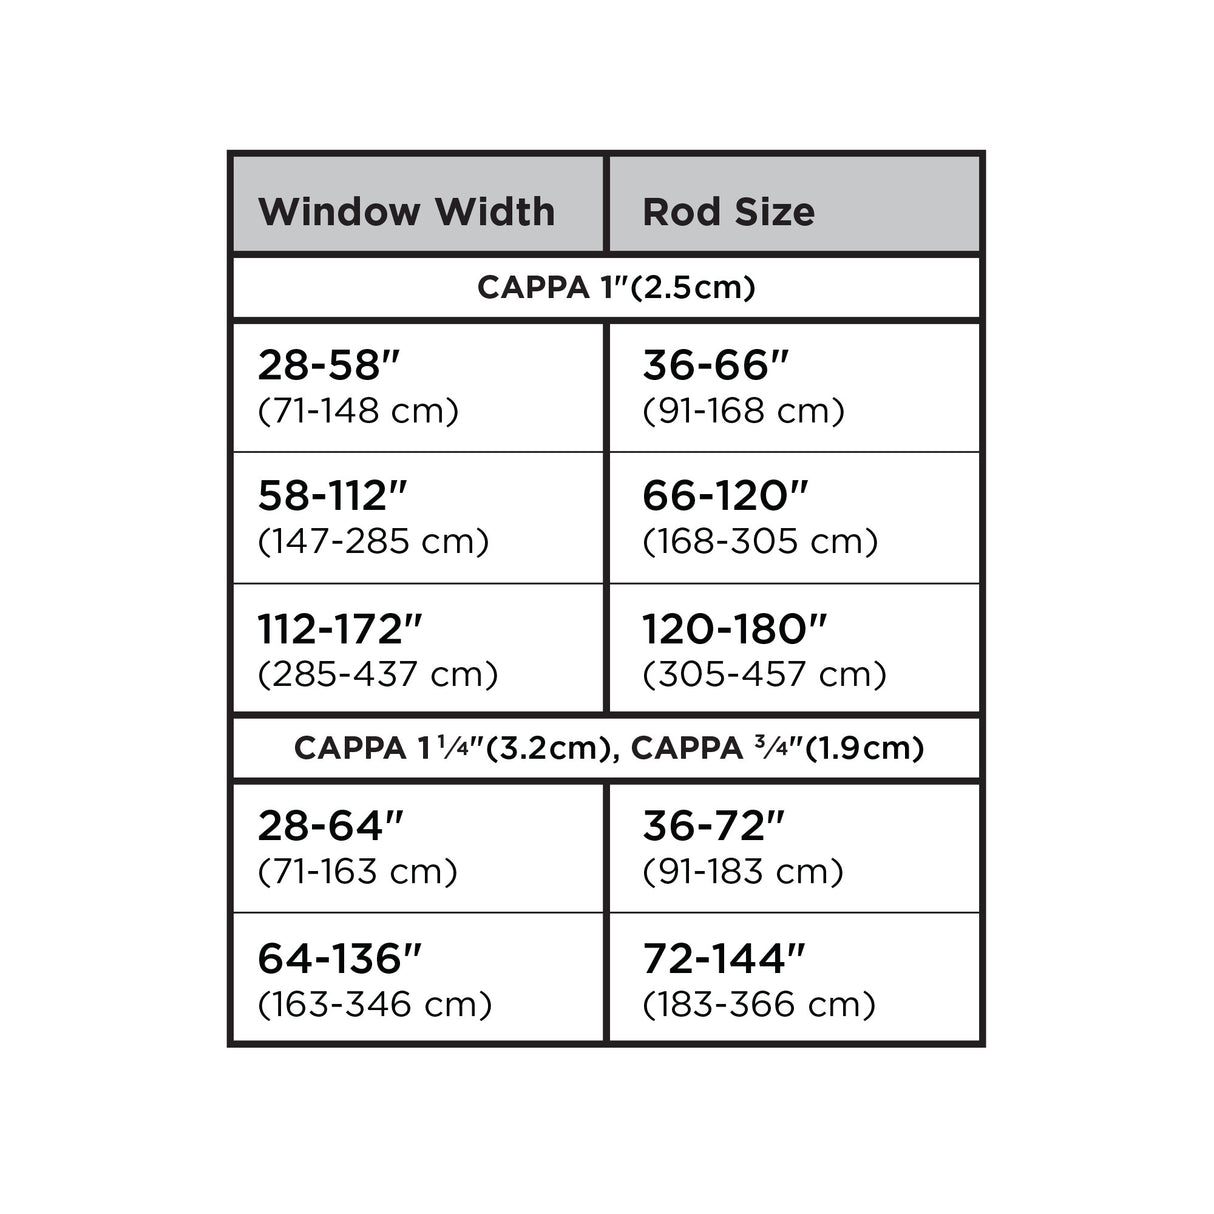 Single Curtain Rods | color: Brass | size: 36-66" (91-168 cm) | diameter: 1" (2.5 cm)